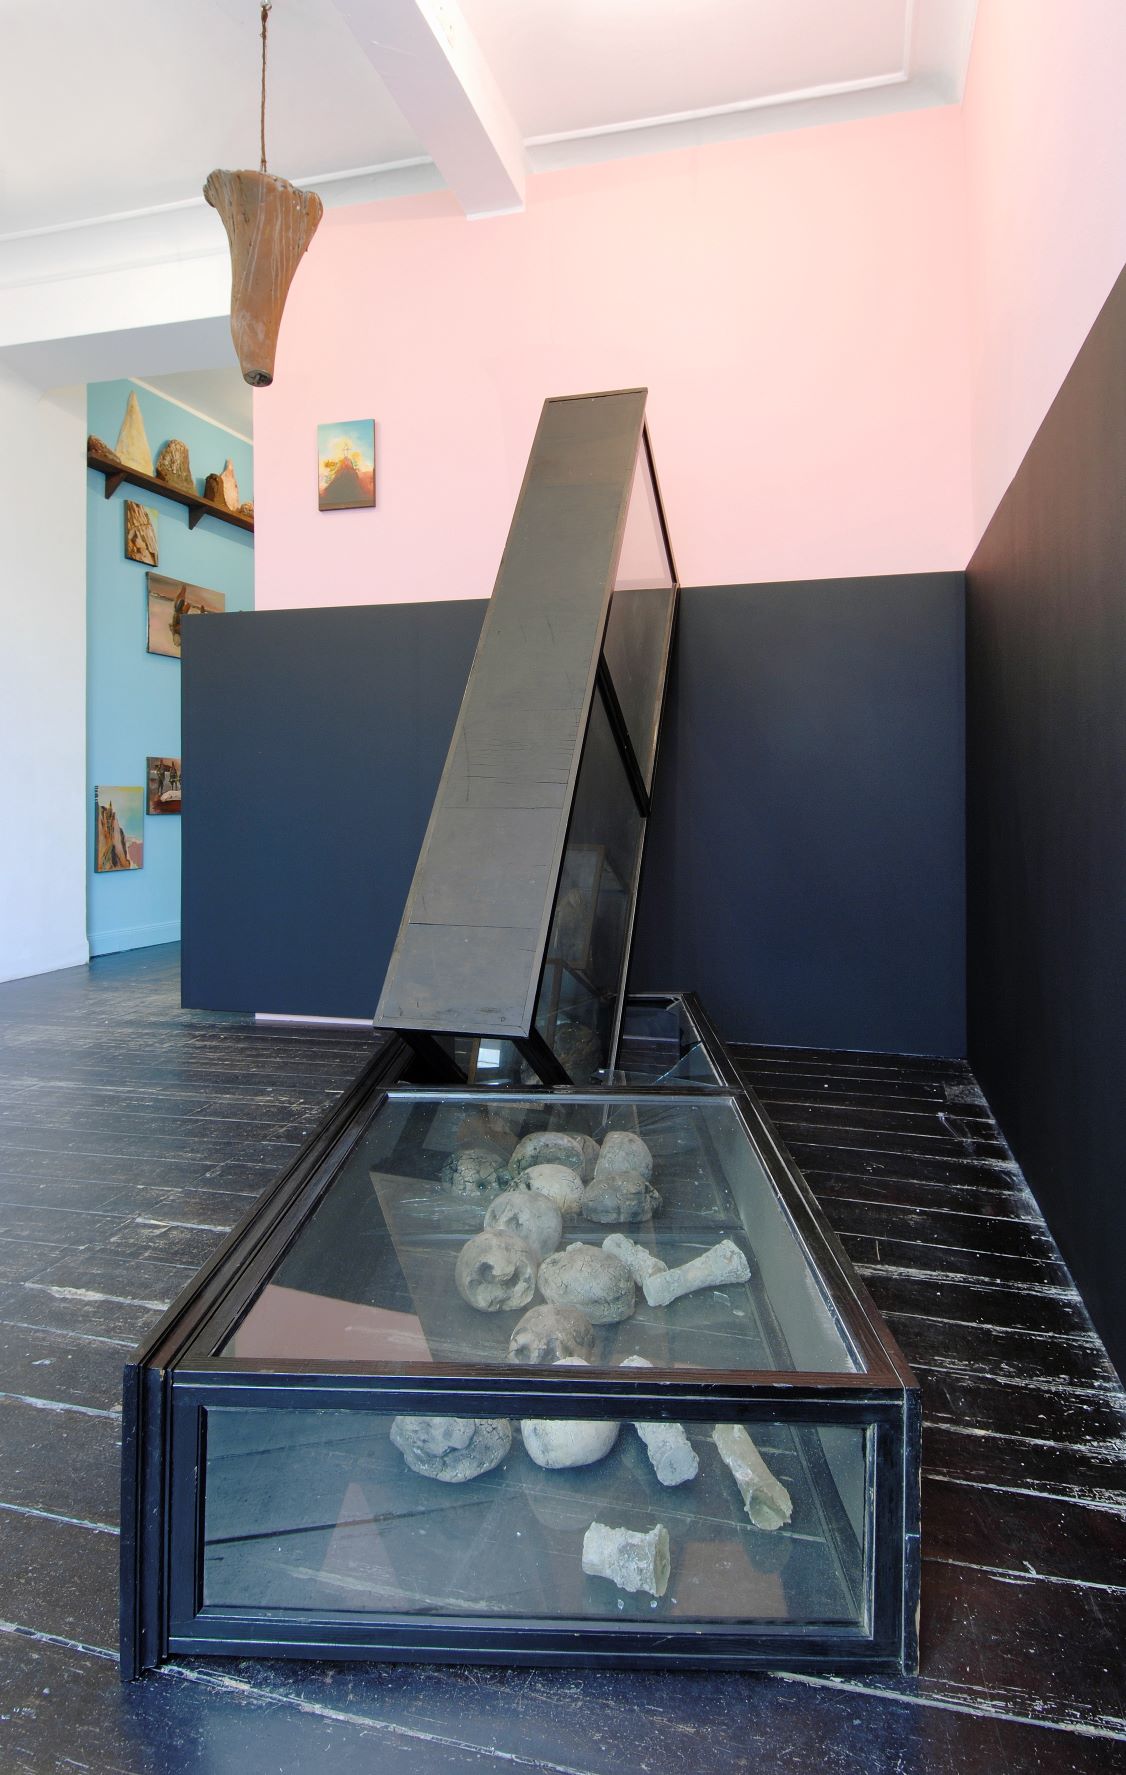 Jörg Herold, Kaukaskie – rezultaty odczuć pana Blumenbacha, Obaleniegablot, Galeria Eigen & Art 2009, fot. Uwe Walter